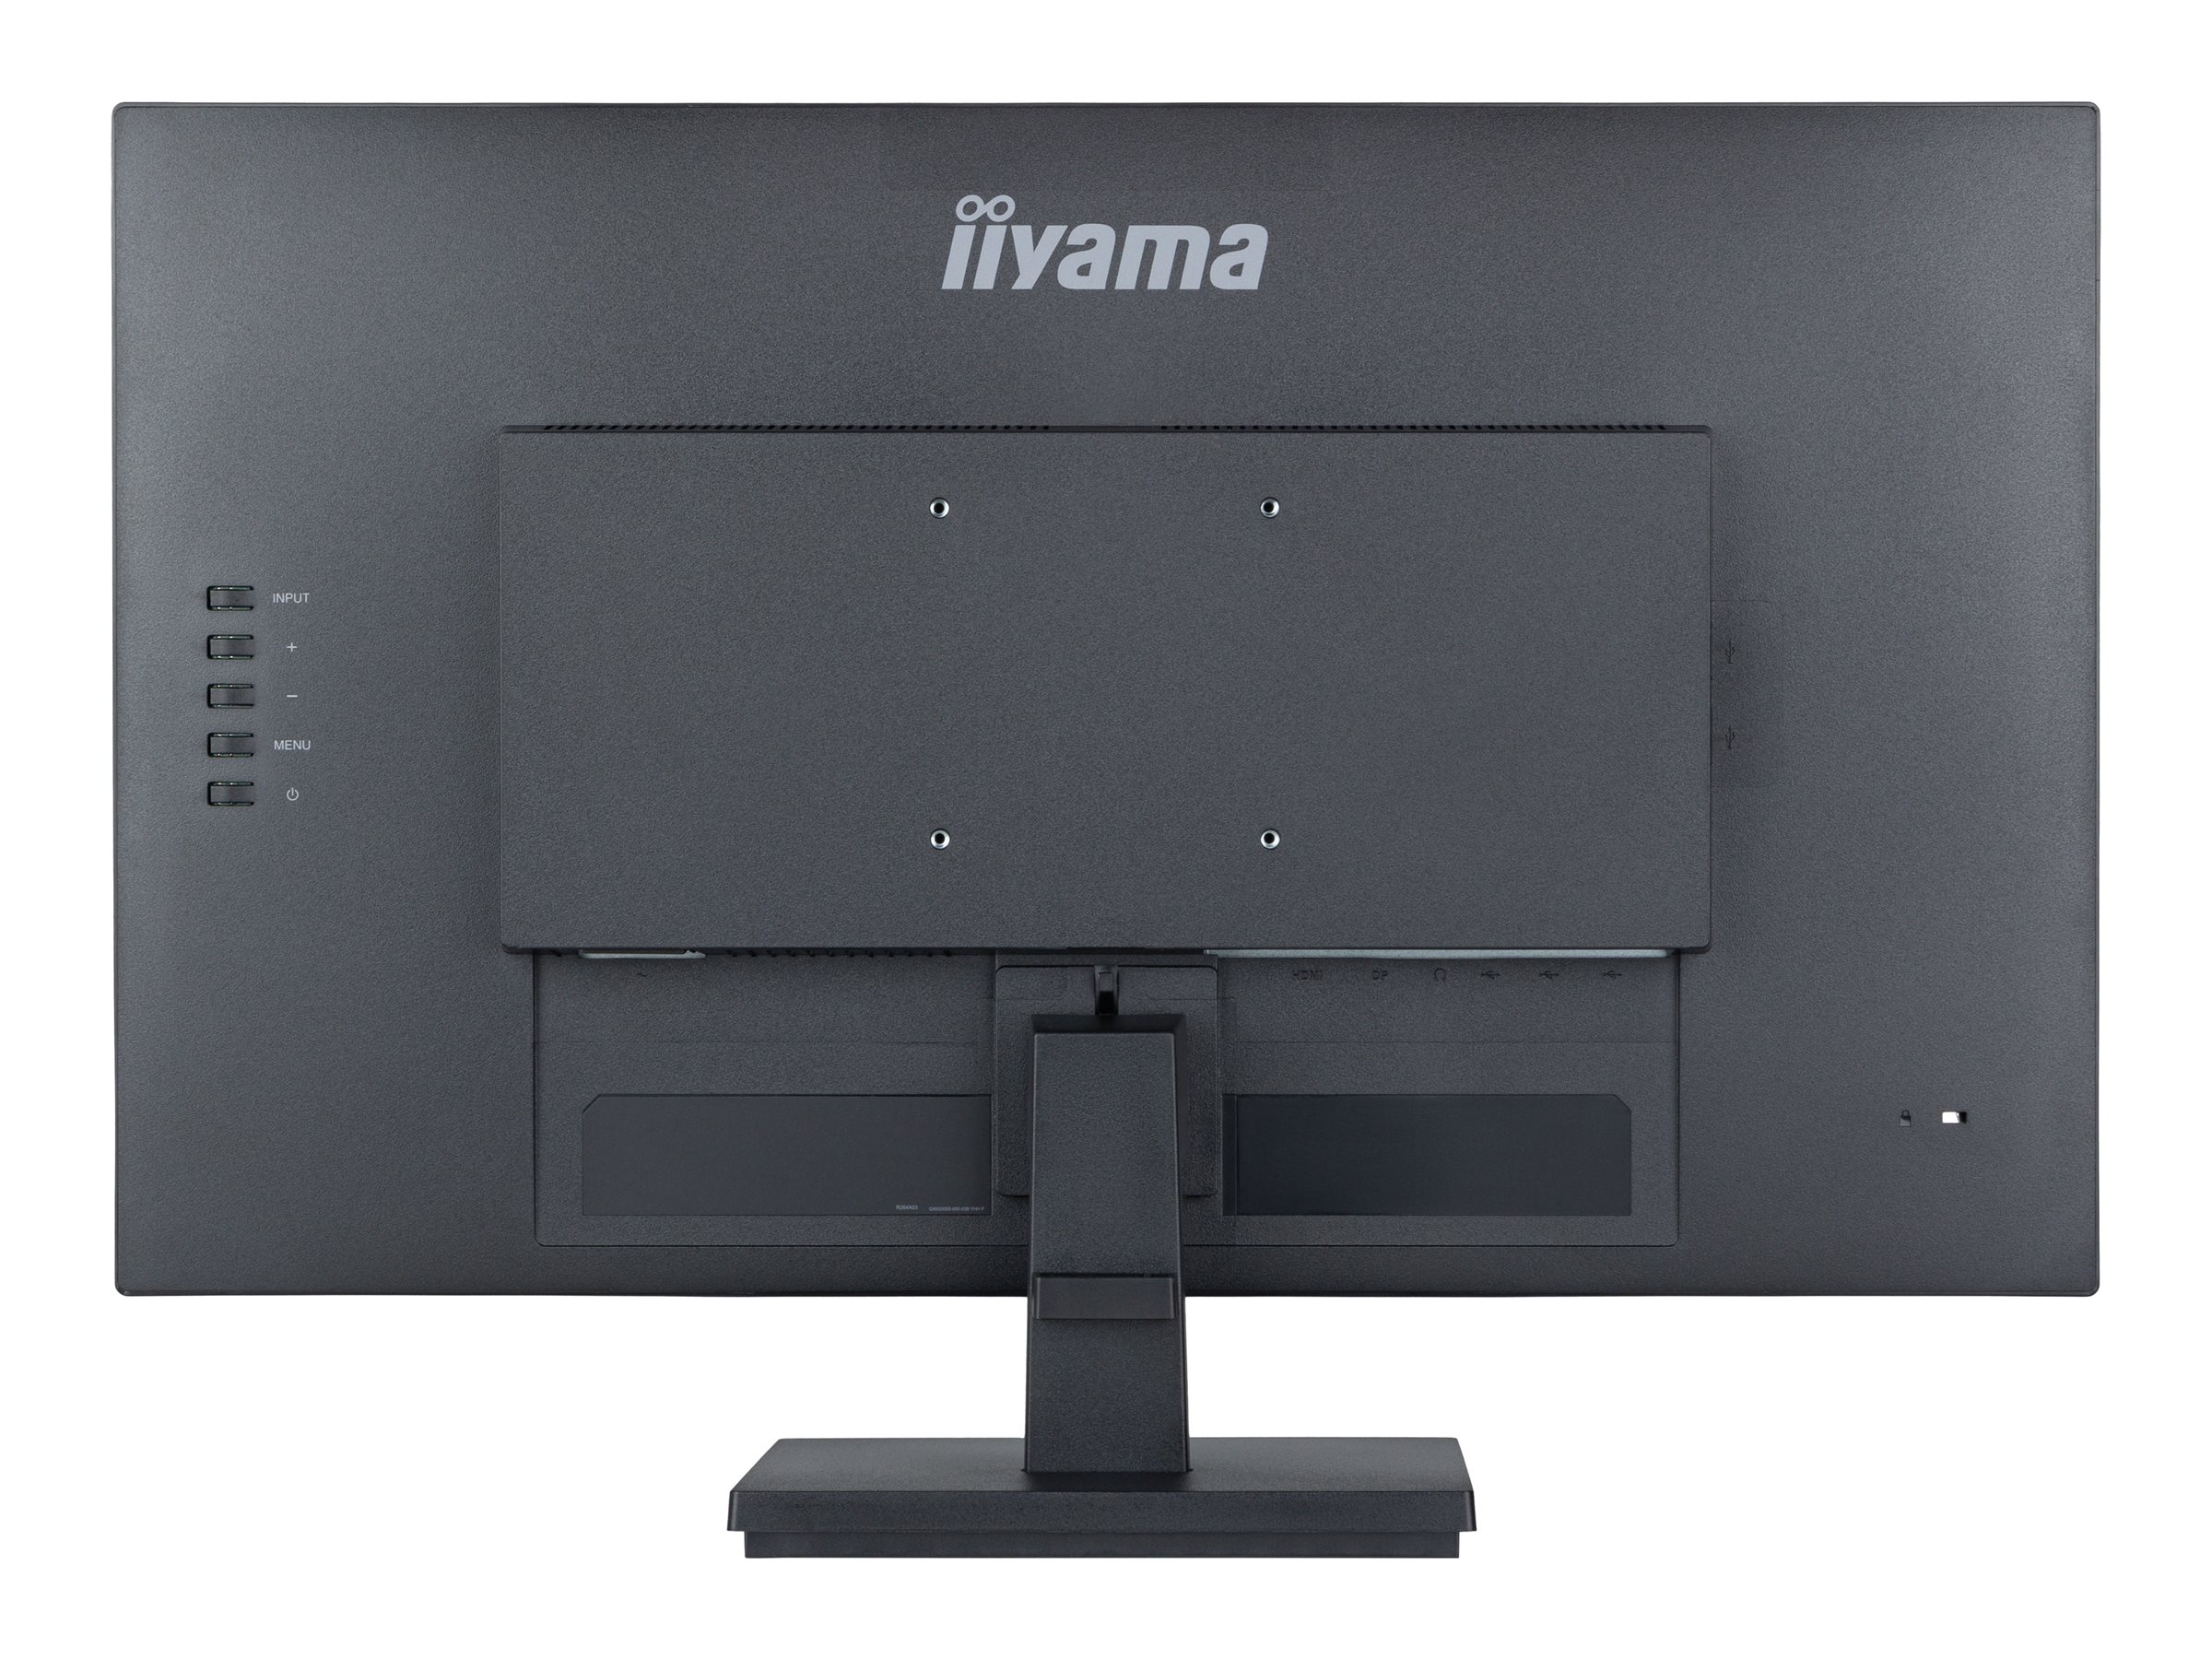 iiyama ProLite XU2792QSU-B6 - Écran LED - 27" - 2560 x 1440 WQHD @ 100 Hz - IPS - 250 cd/m² - 1300:1 - 0.4 ms - HDMI, DisplayPort - haut-parleurs - noir mat - XU2792QSU-B6 - Écrans d'ordinateur